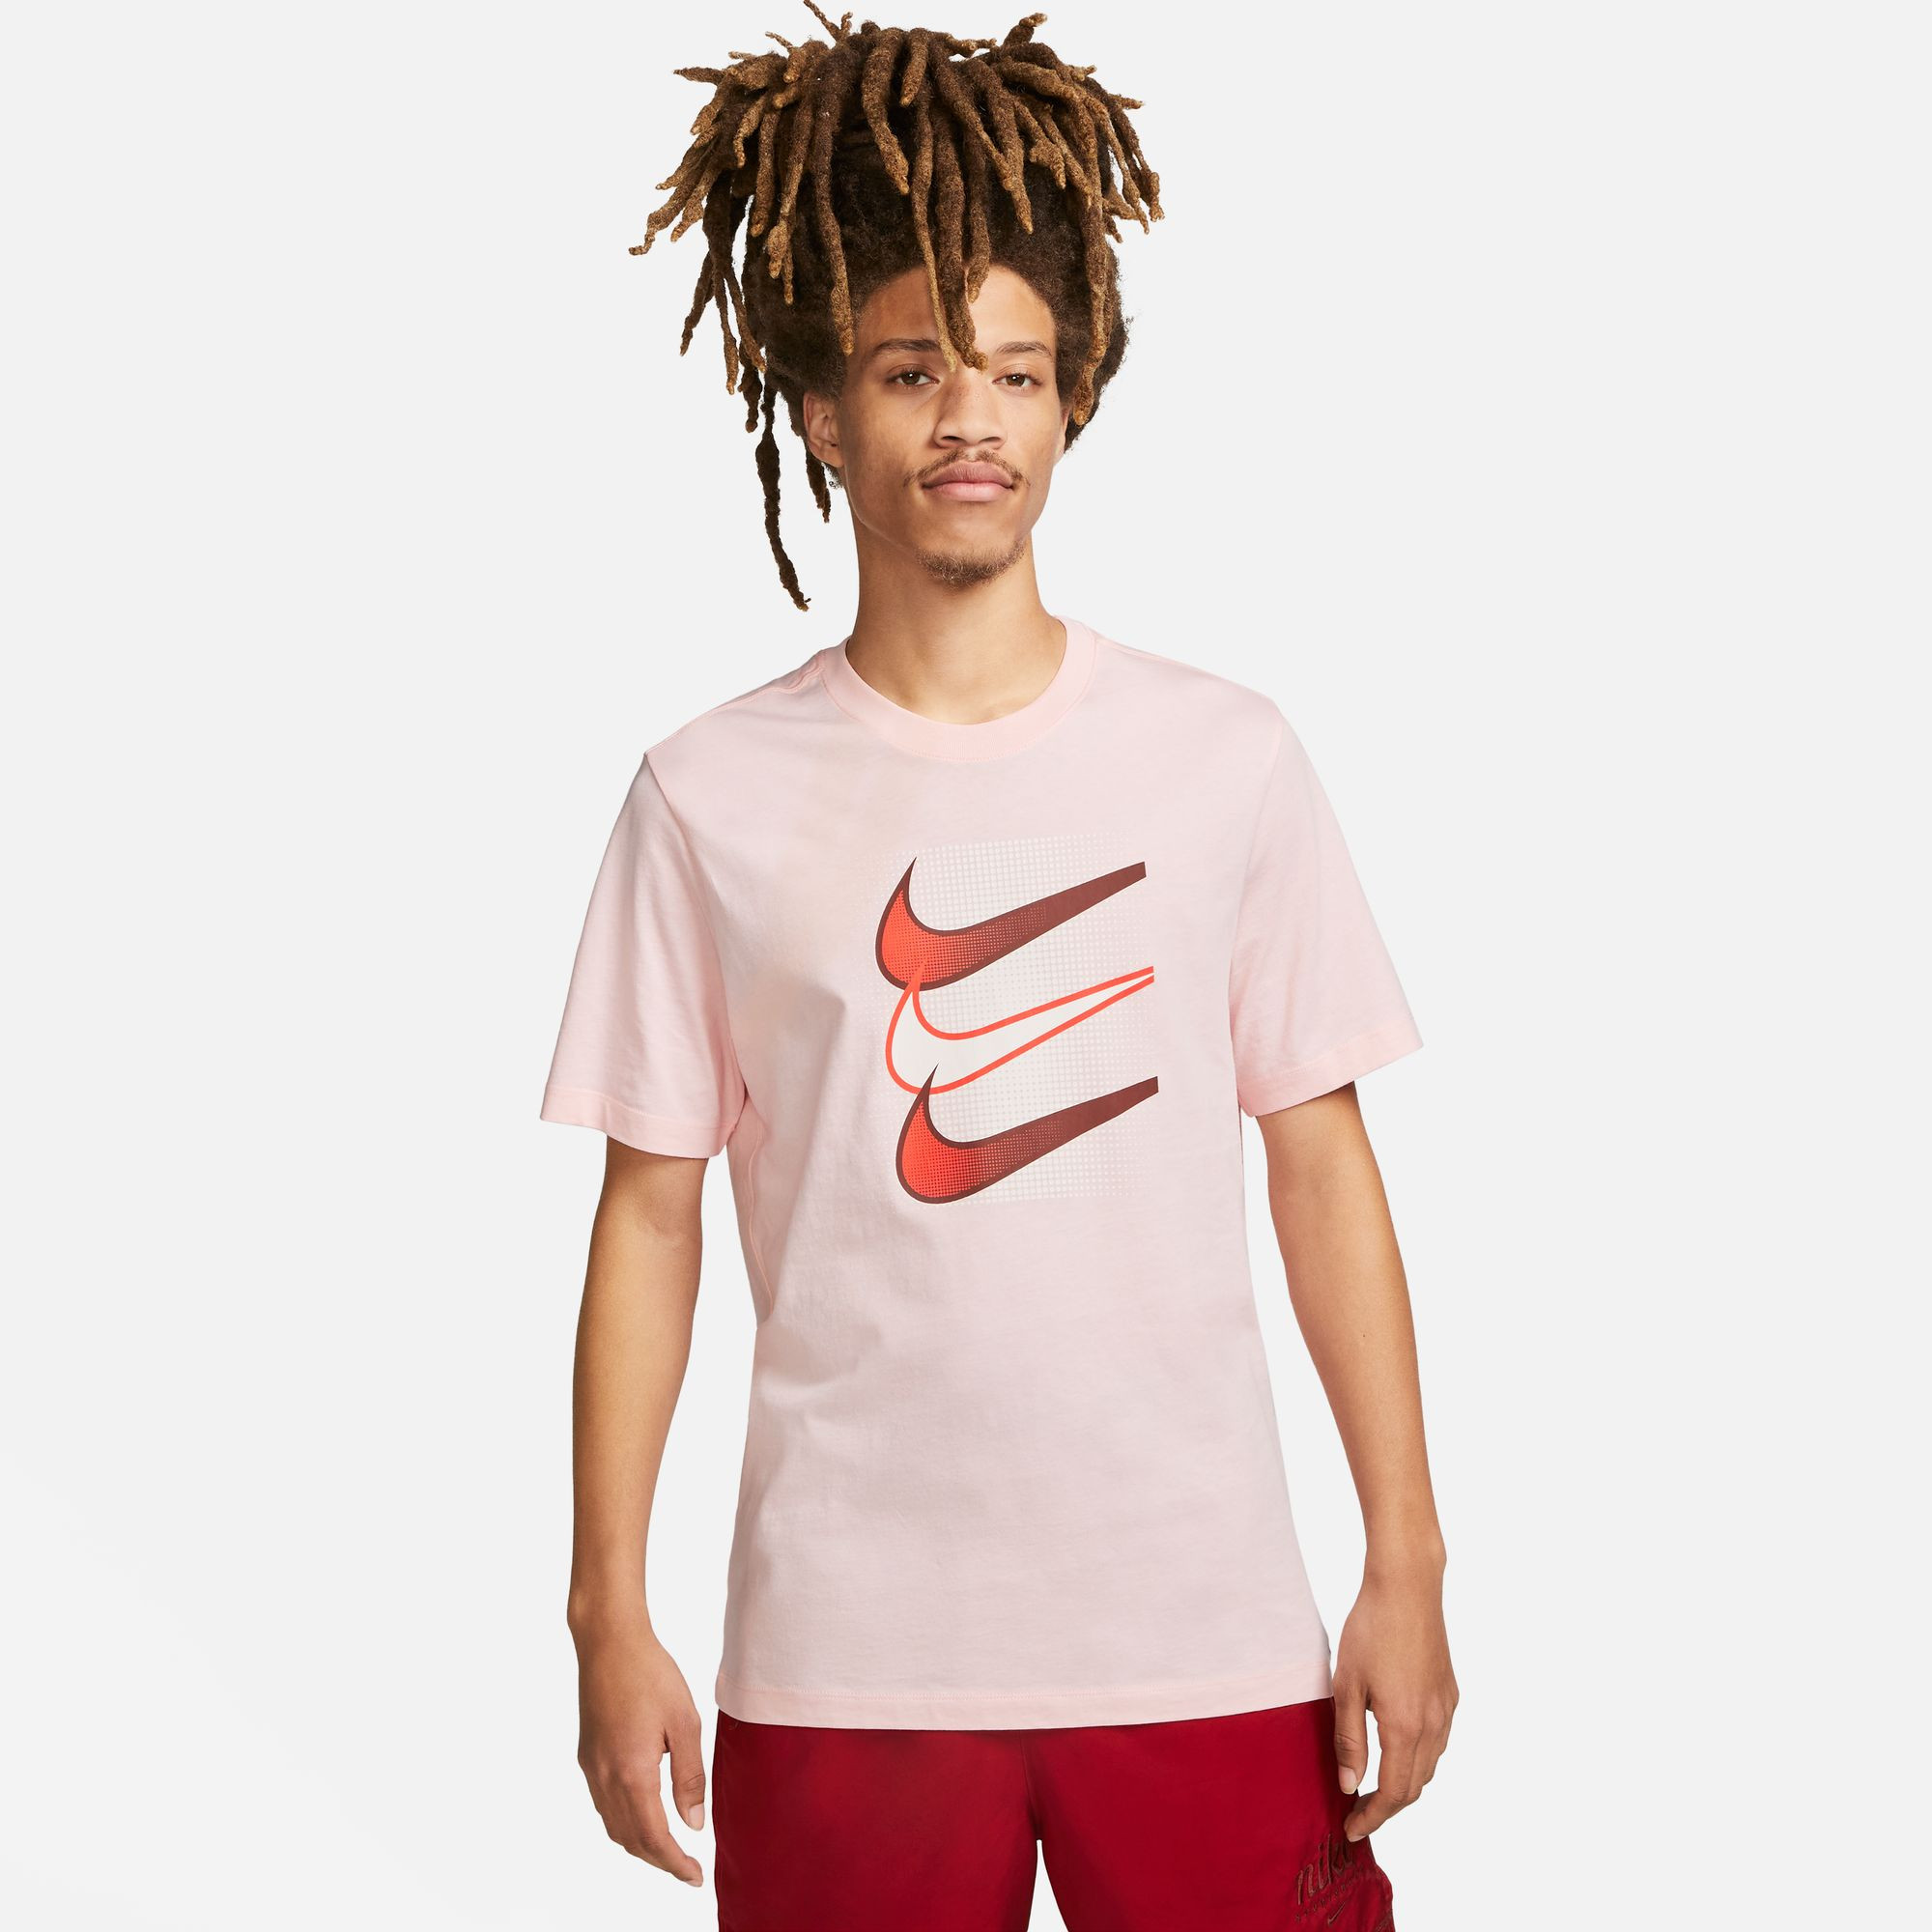 T-shirt pour homme Nike Sportswear - Fleur rose